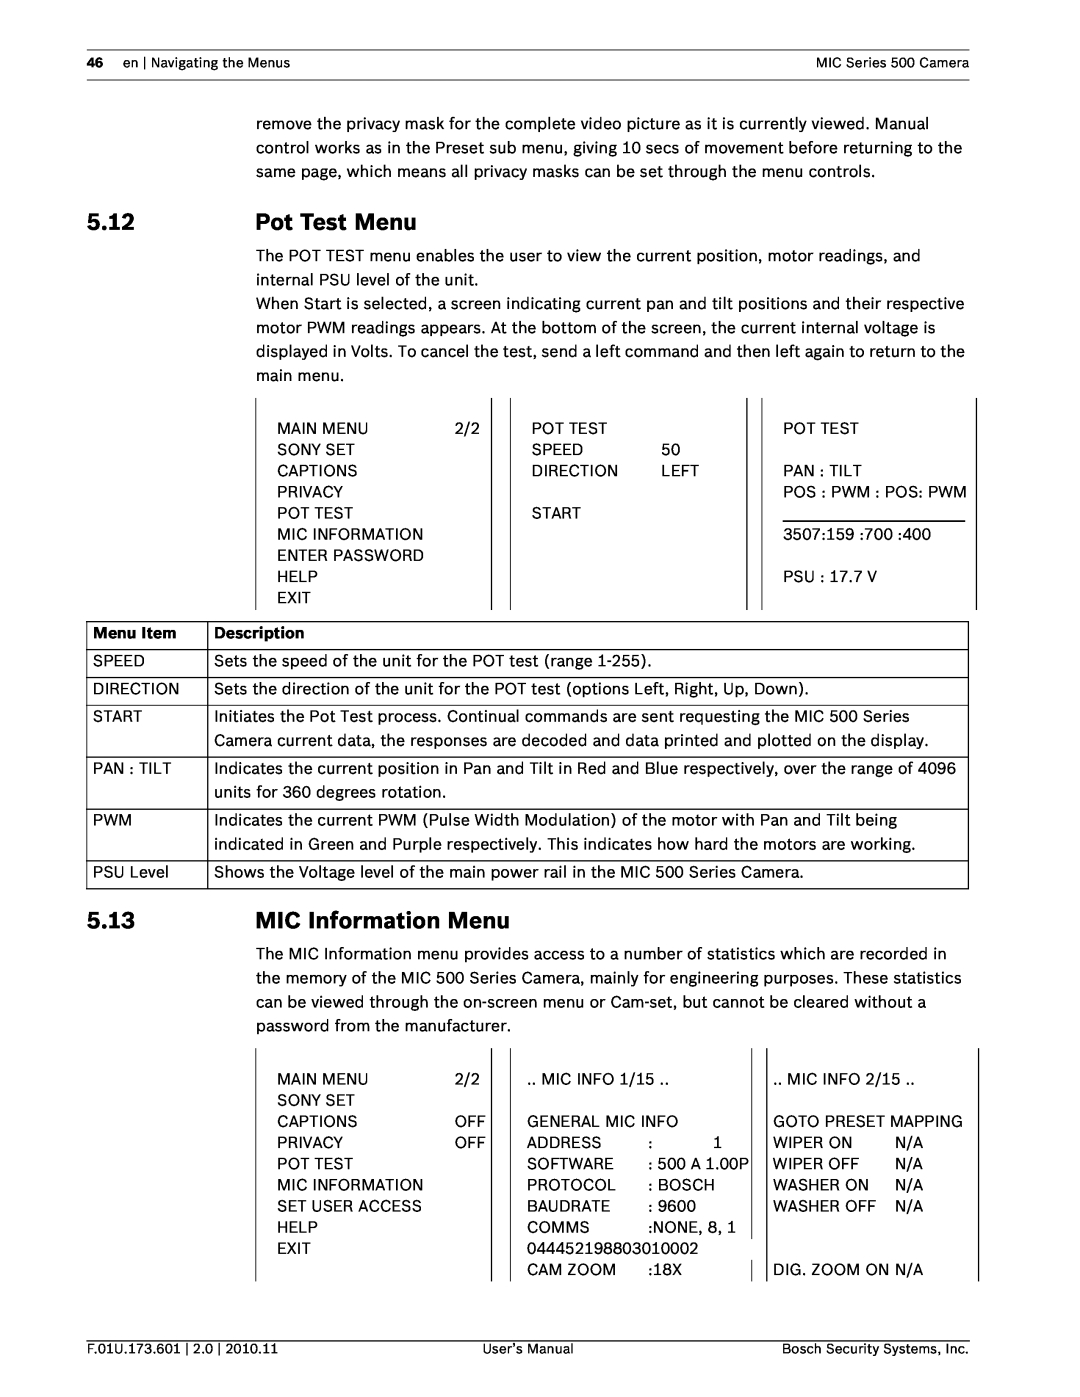 Bosch Appliances 500 user manual 5.12, Pot Test Menu, 5.13MIC Information Menu, Menu Item, Description 